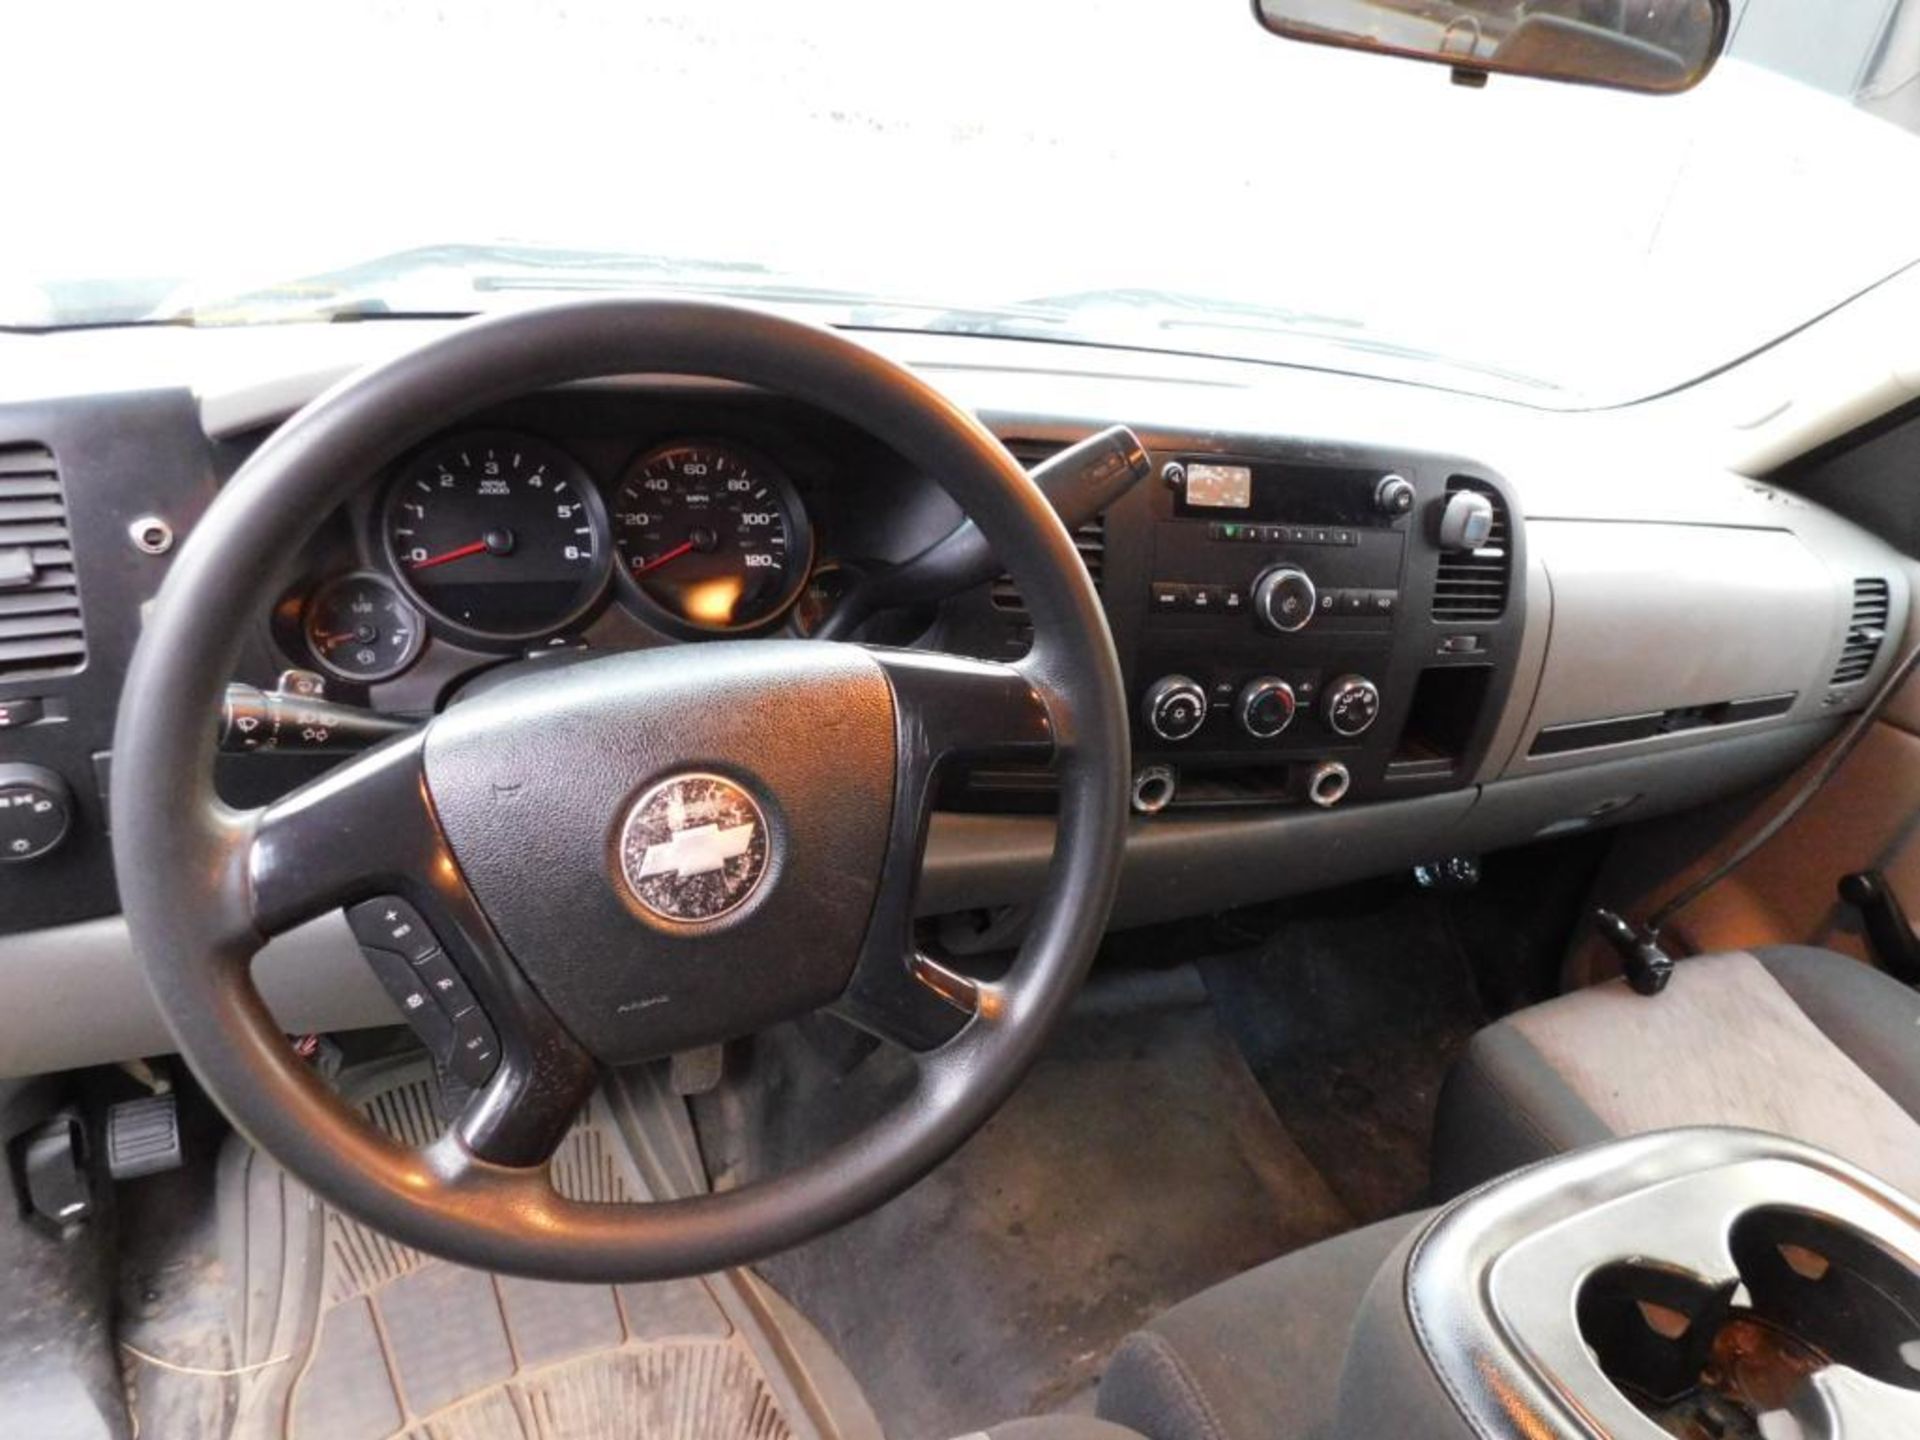 2007 Chevy Silverado Extended Cab, 2-Wheel Drive, 5.3 Liter Vortex, V8 Gasoline Motor, Auto, 6'6" Be - Image 8 of 11